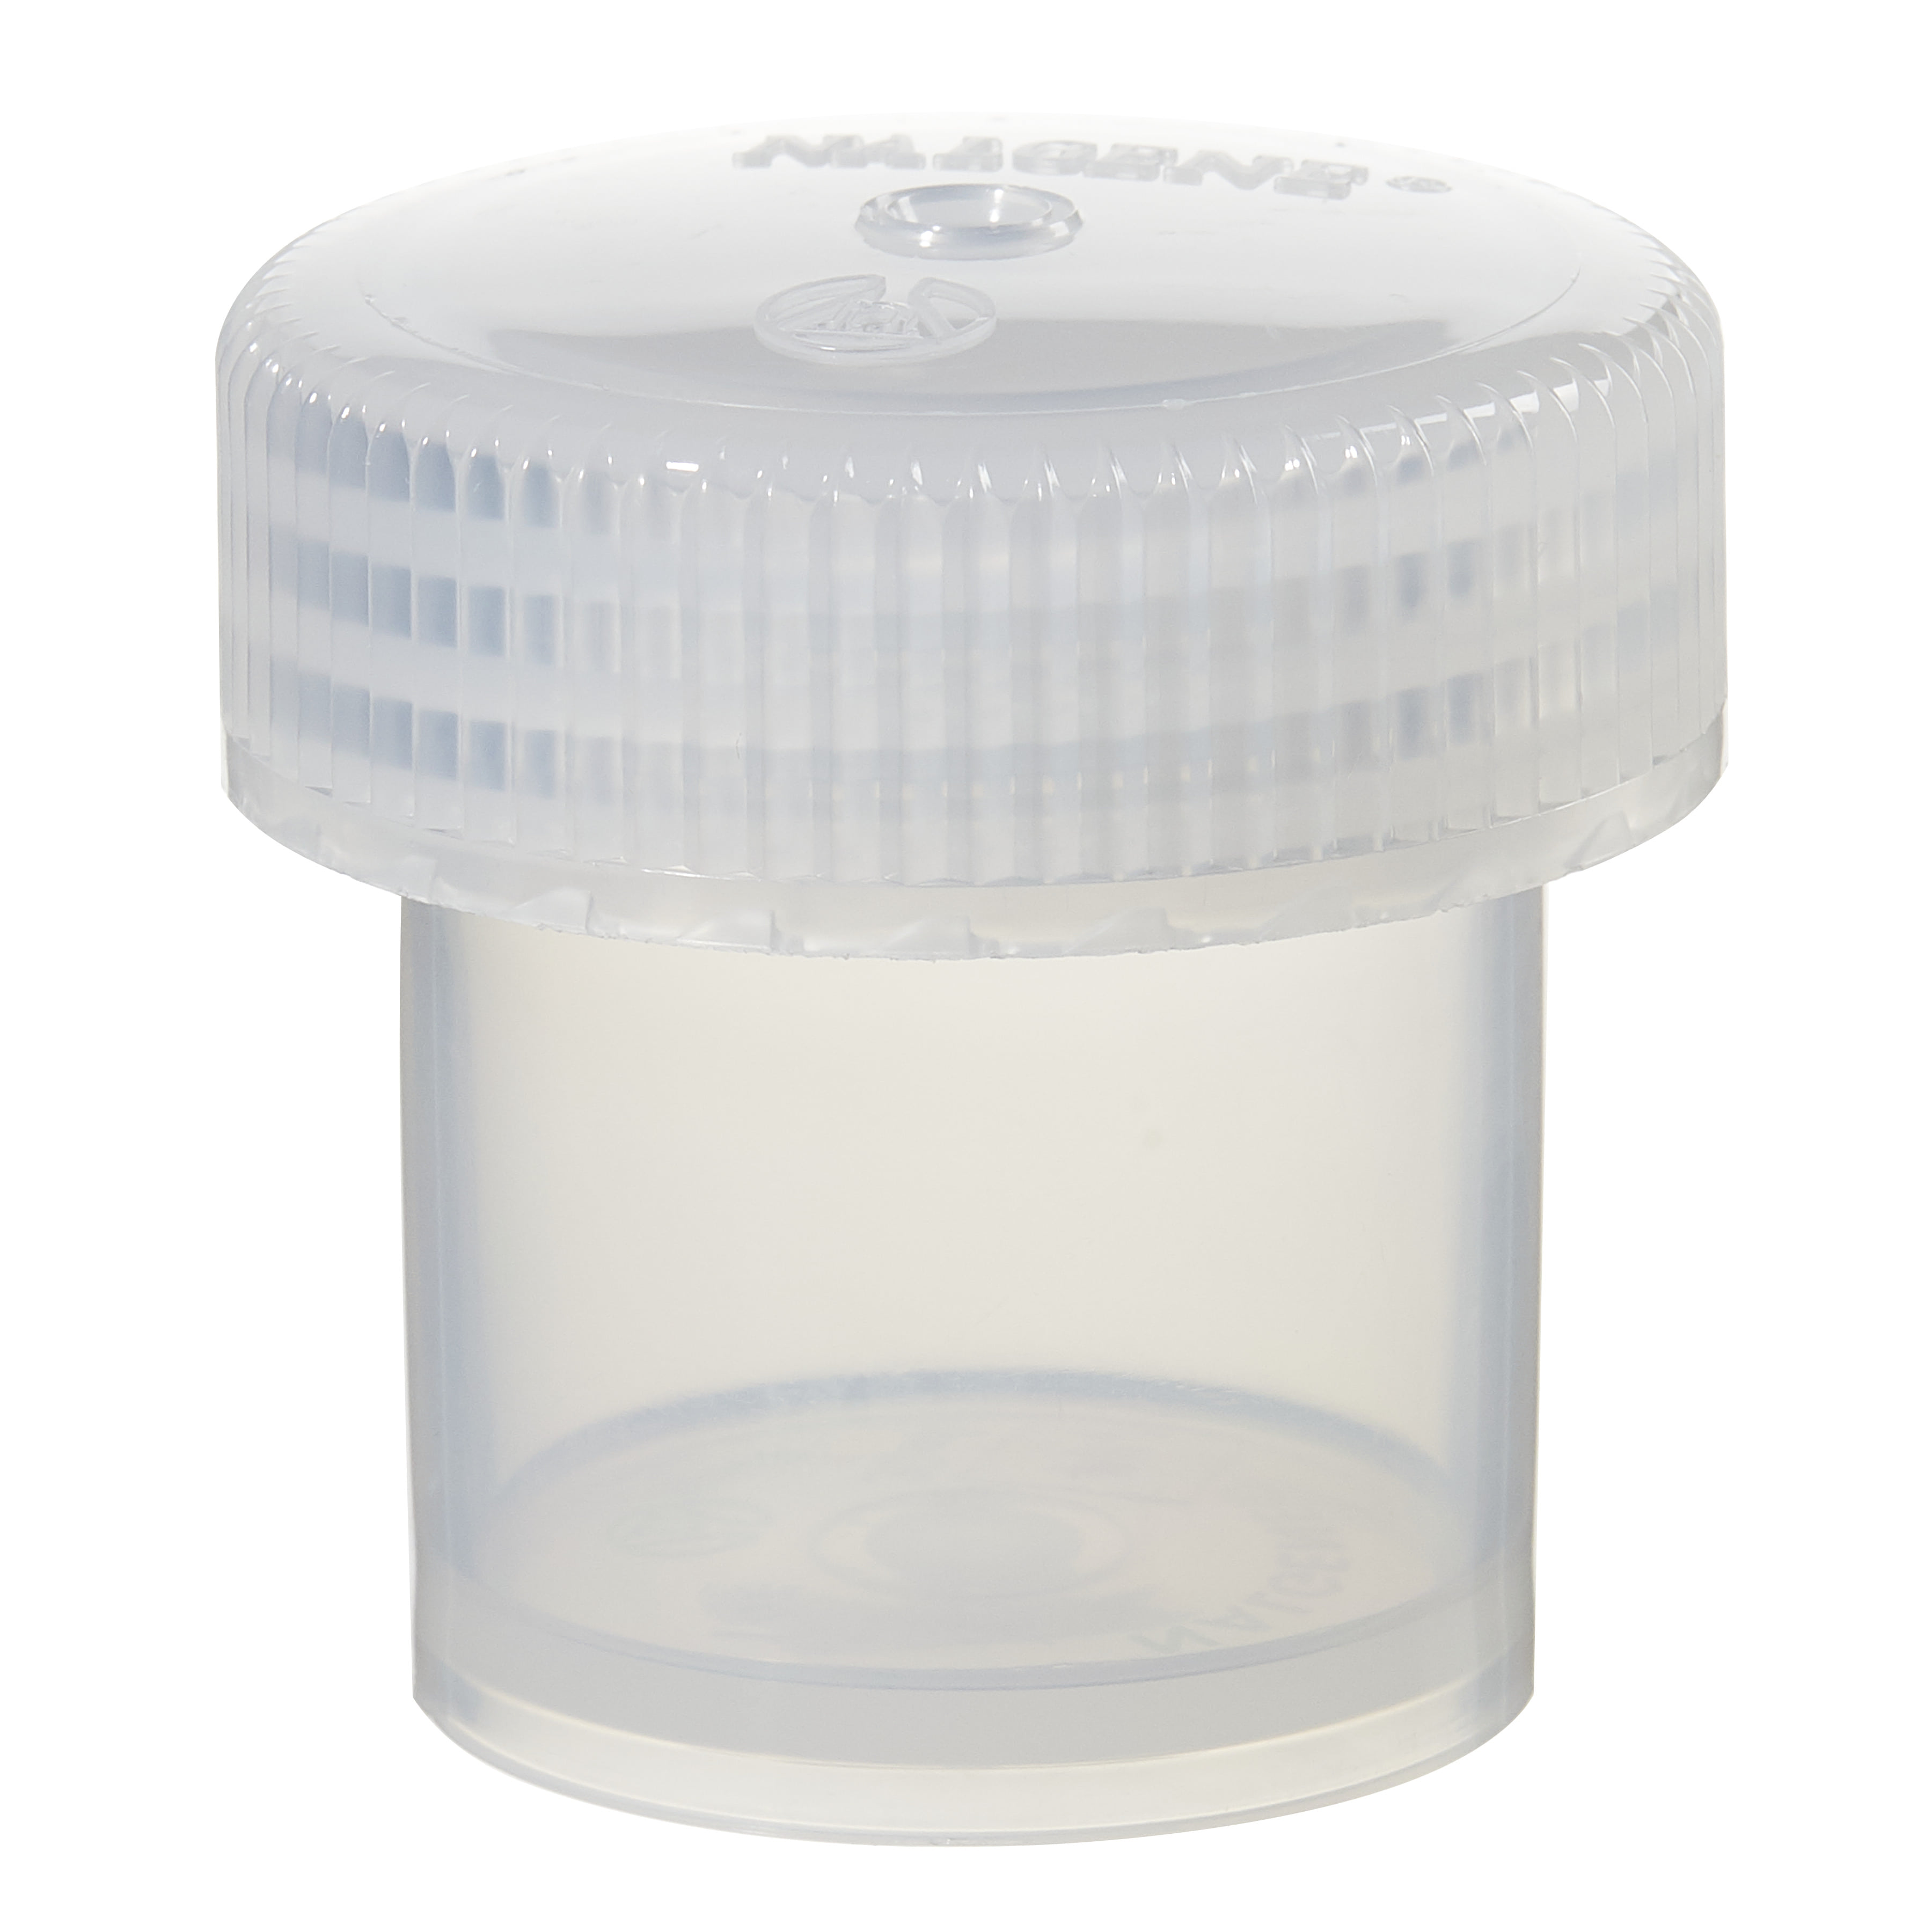 [Thermo Nalgene] 2118-0001 / 30mL Nalgene Wide-Mouth Straight-Sided PPCO Jar